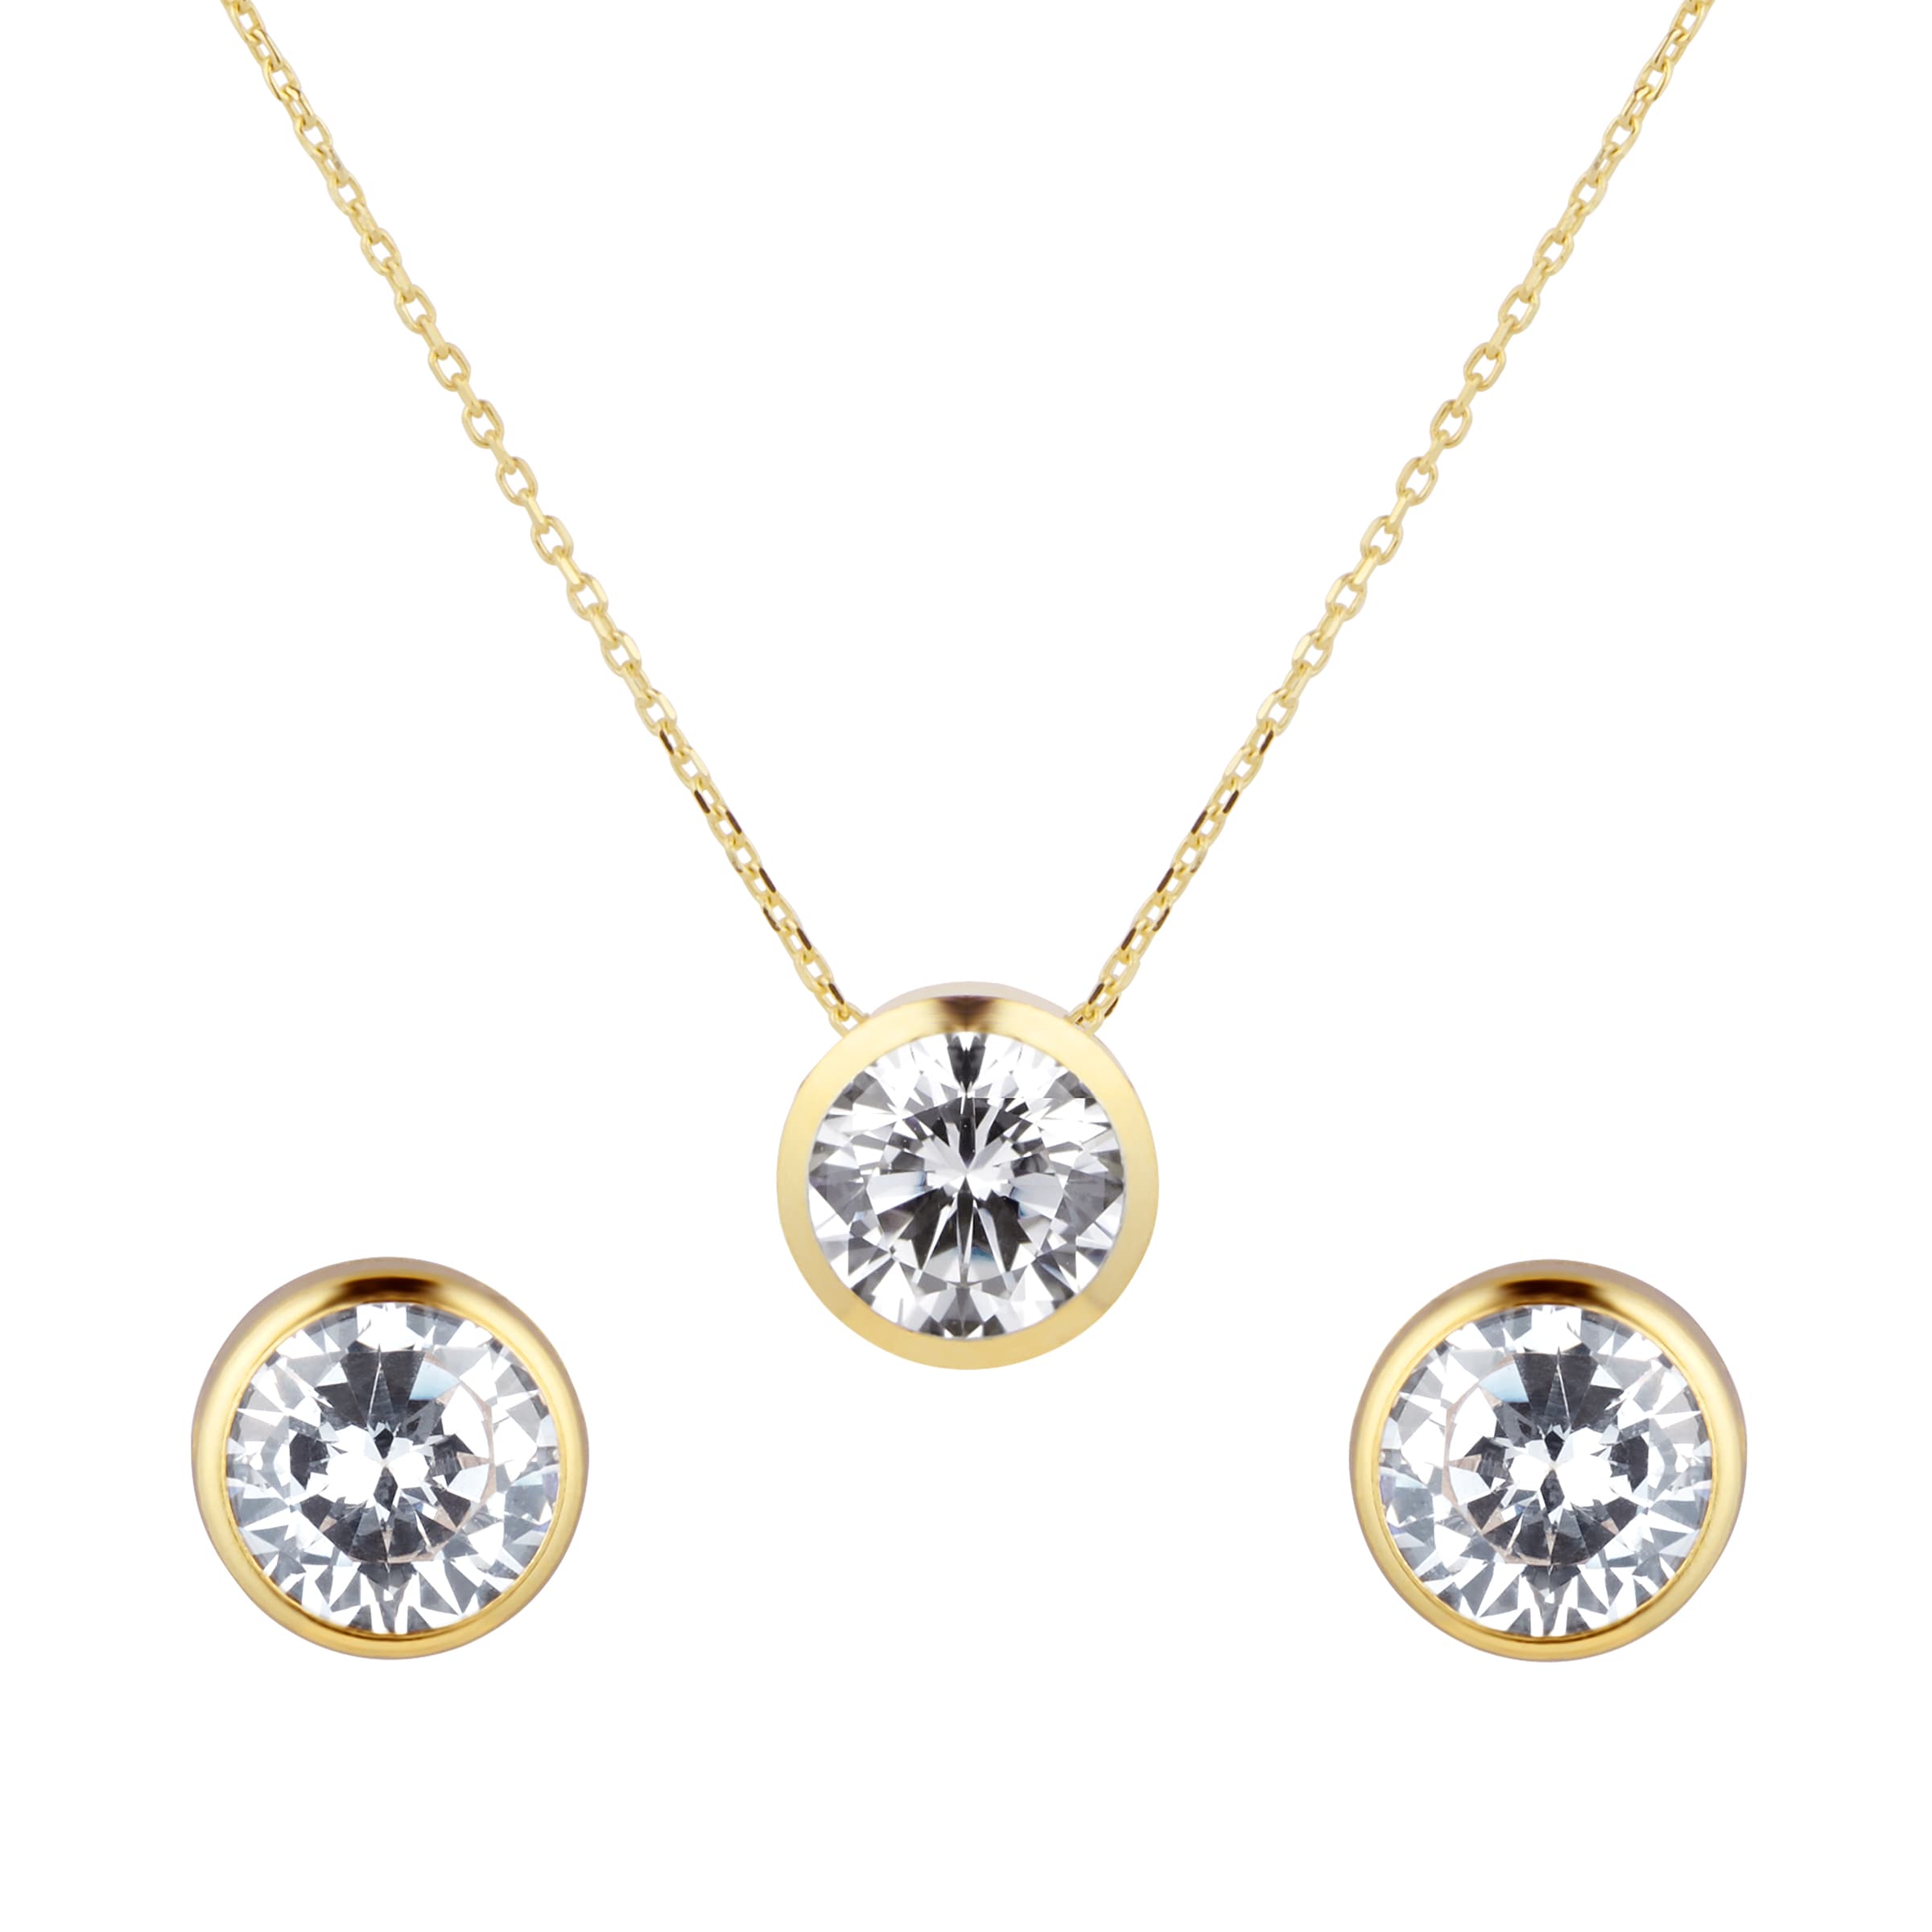 AVANTI 9ct Yellow Gold Crashing Wave Necklace and Earring Gift Set - Womens  from Avanti of Ashbourne Ltd UK